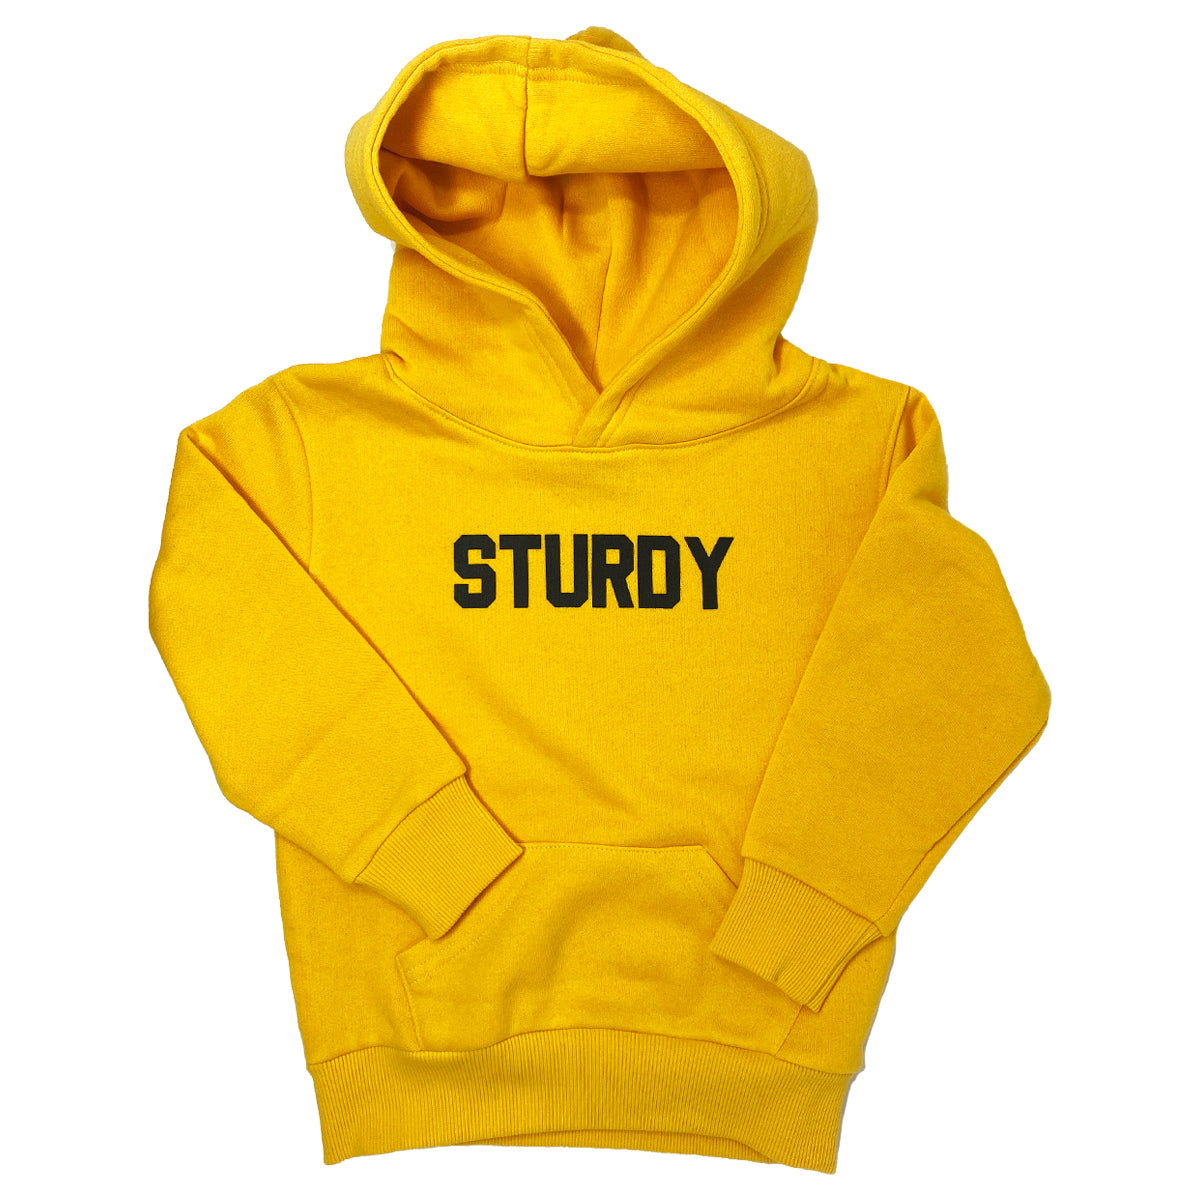 Sturdy Hoodie (Mustard)